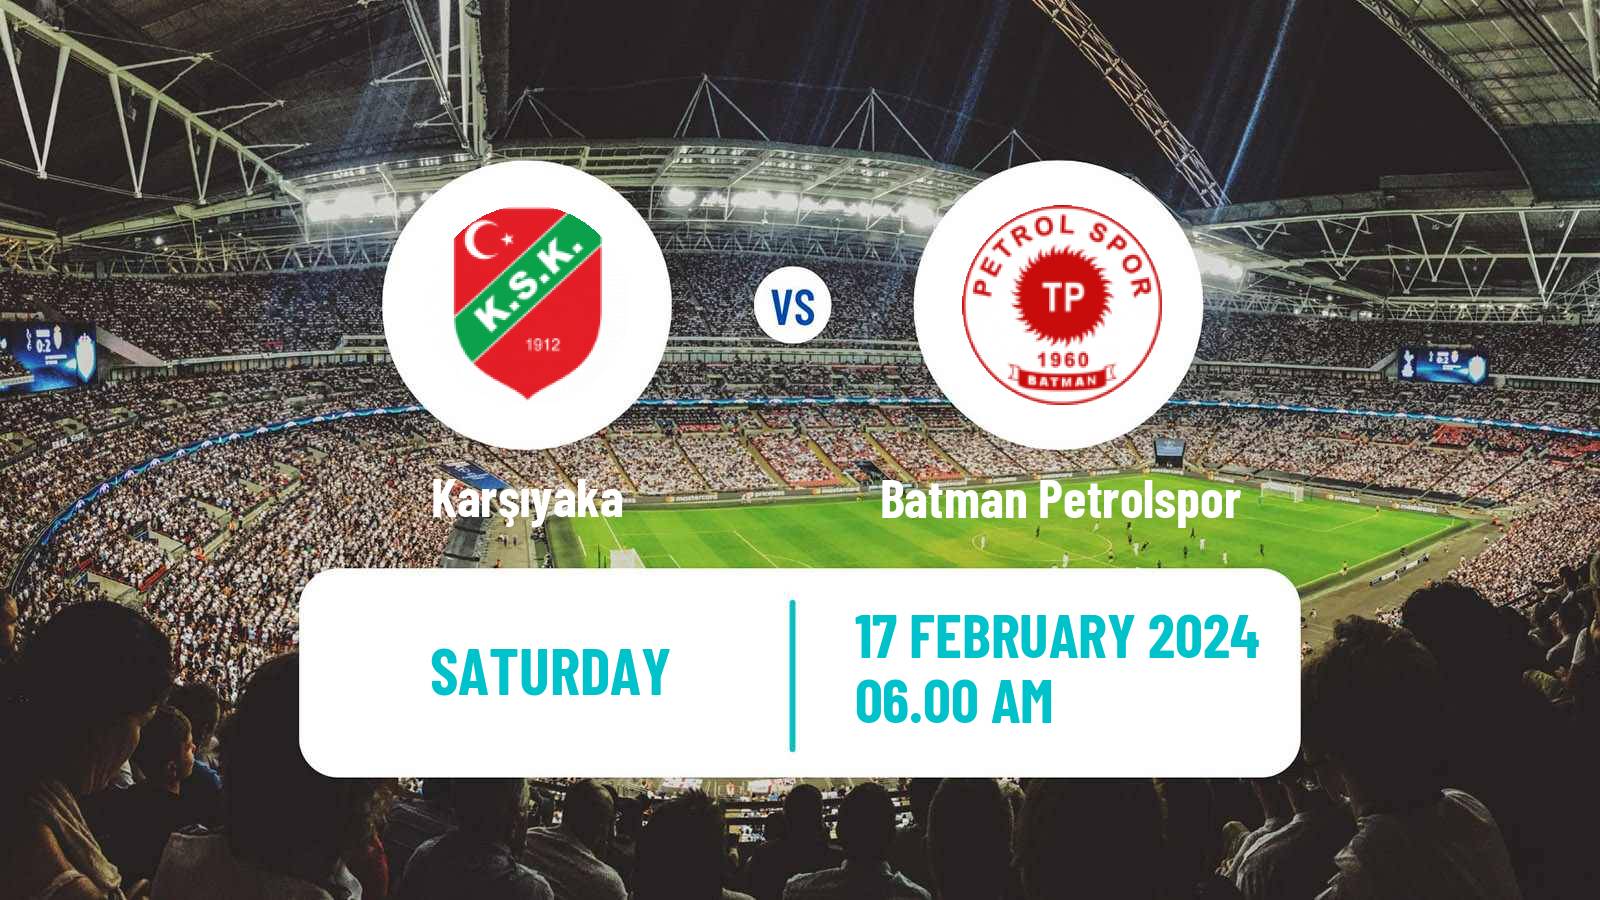 Soccer Turkish 3 Lig Group 2 Karşıyaka - Batman Petrolspor